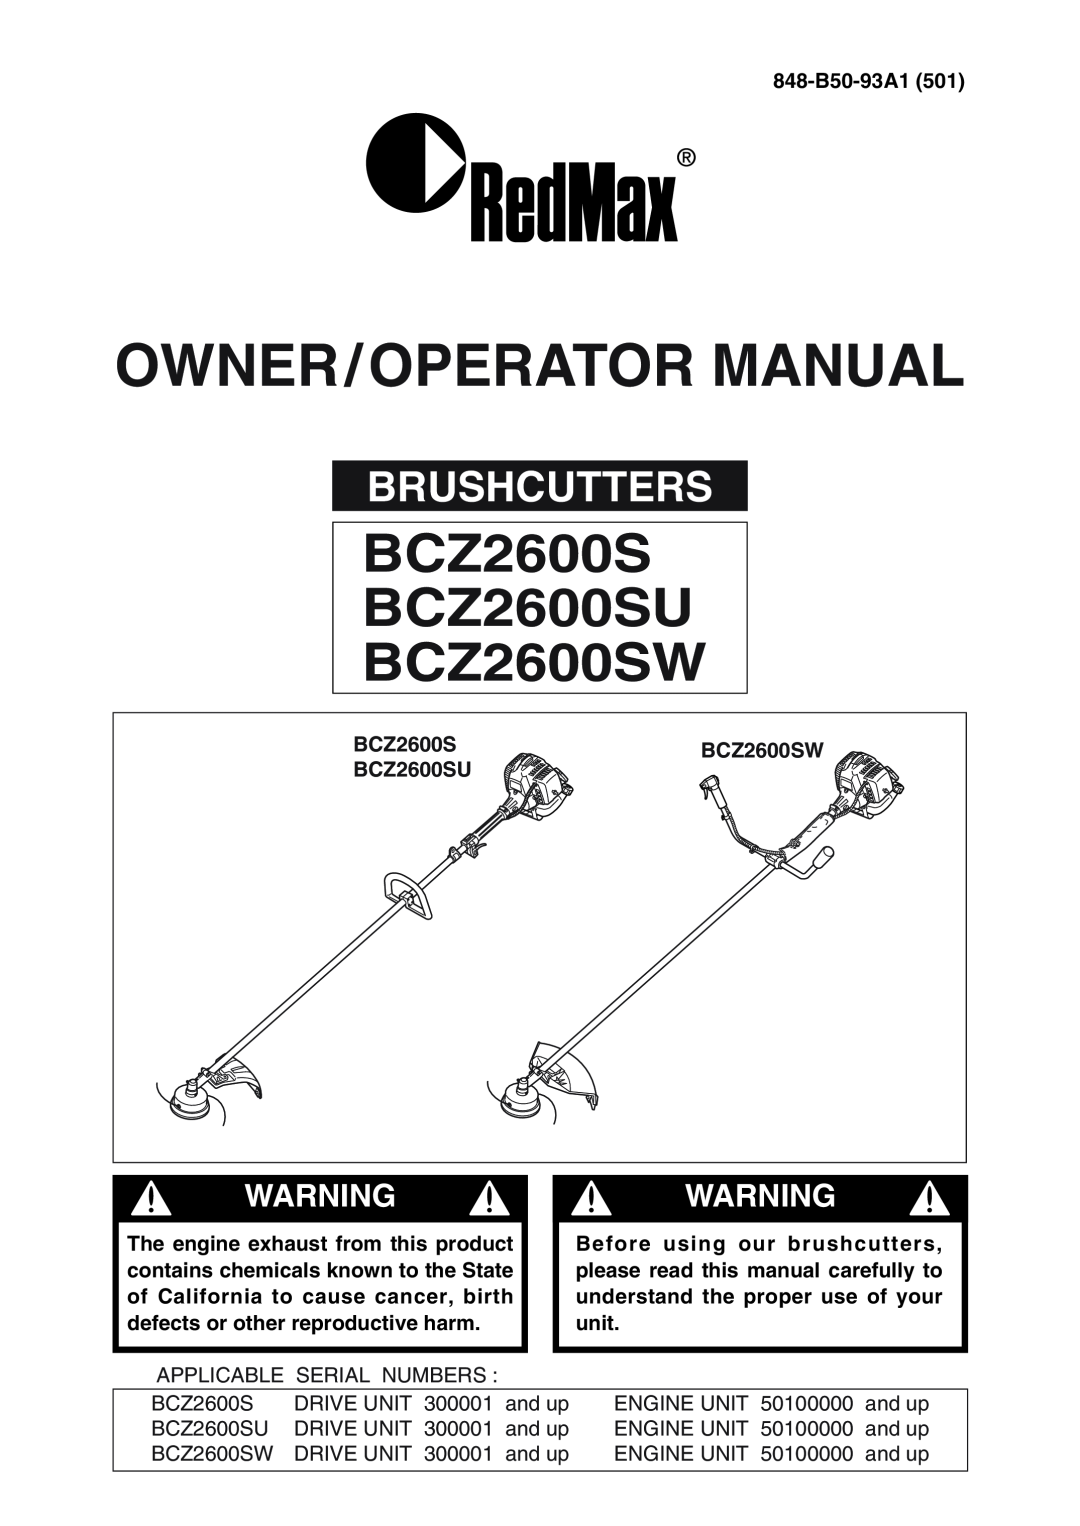 Zenoah manual BCZ2600S BCZ2600SU BCZ2600SW, Brushcutters, 848-B50-93A1501, Owner/Operator Manual 